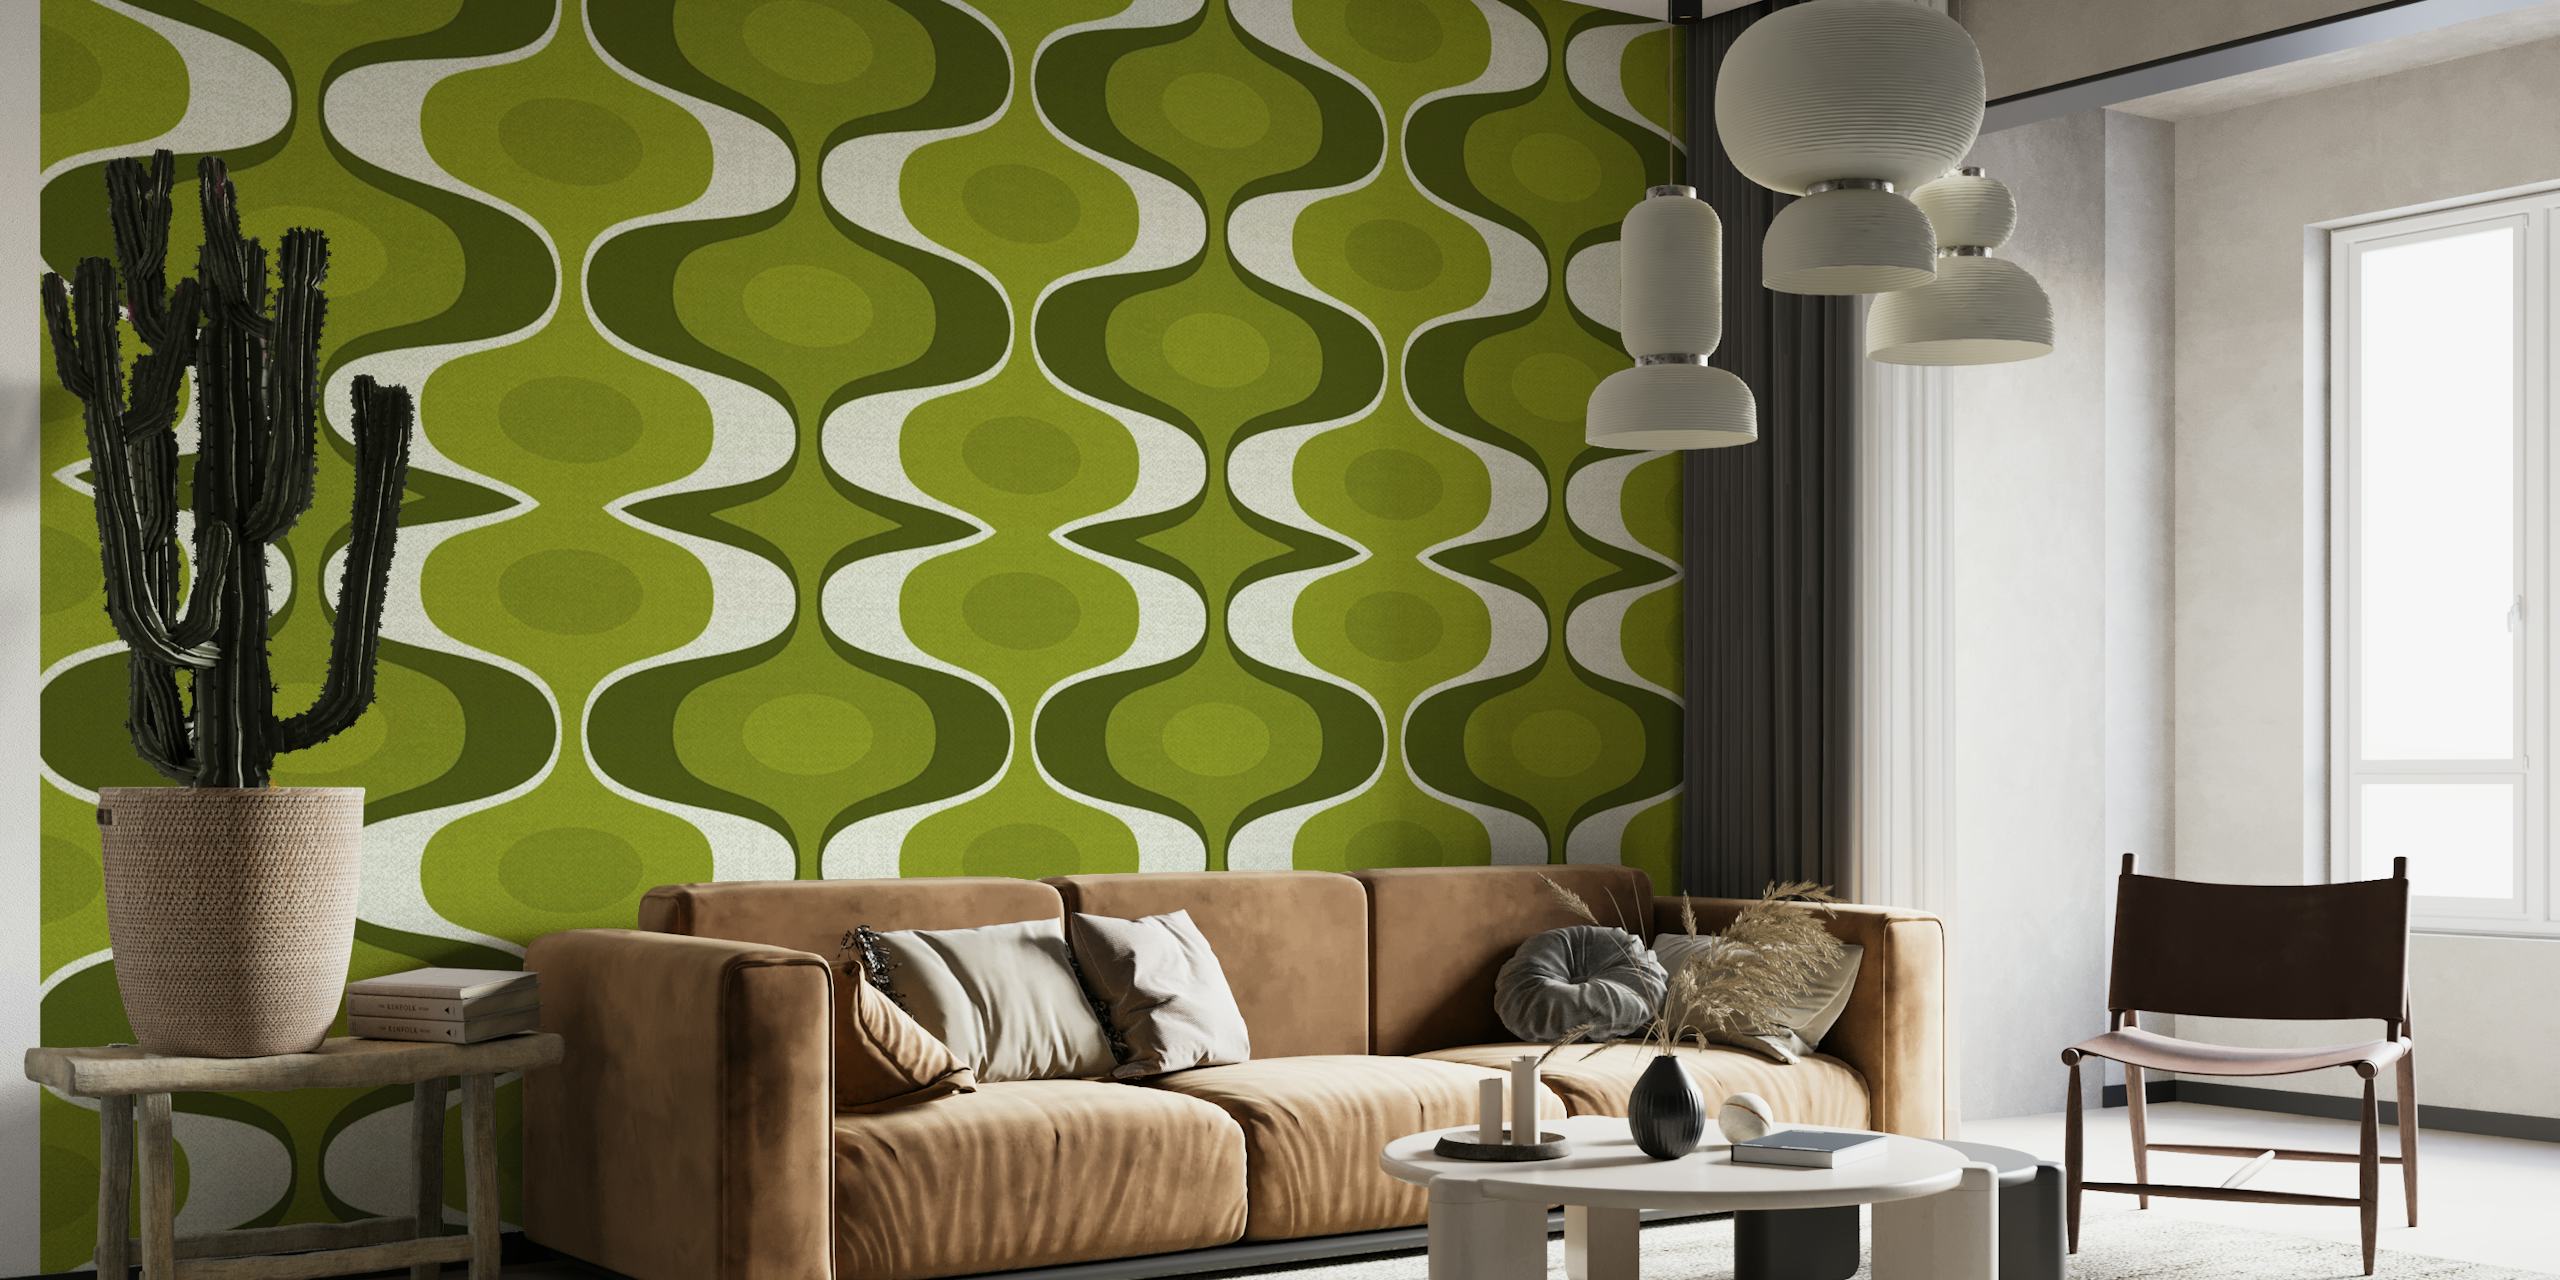 Retro 70s Vivid Green Groovy Fabric wallpaper